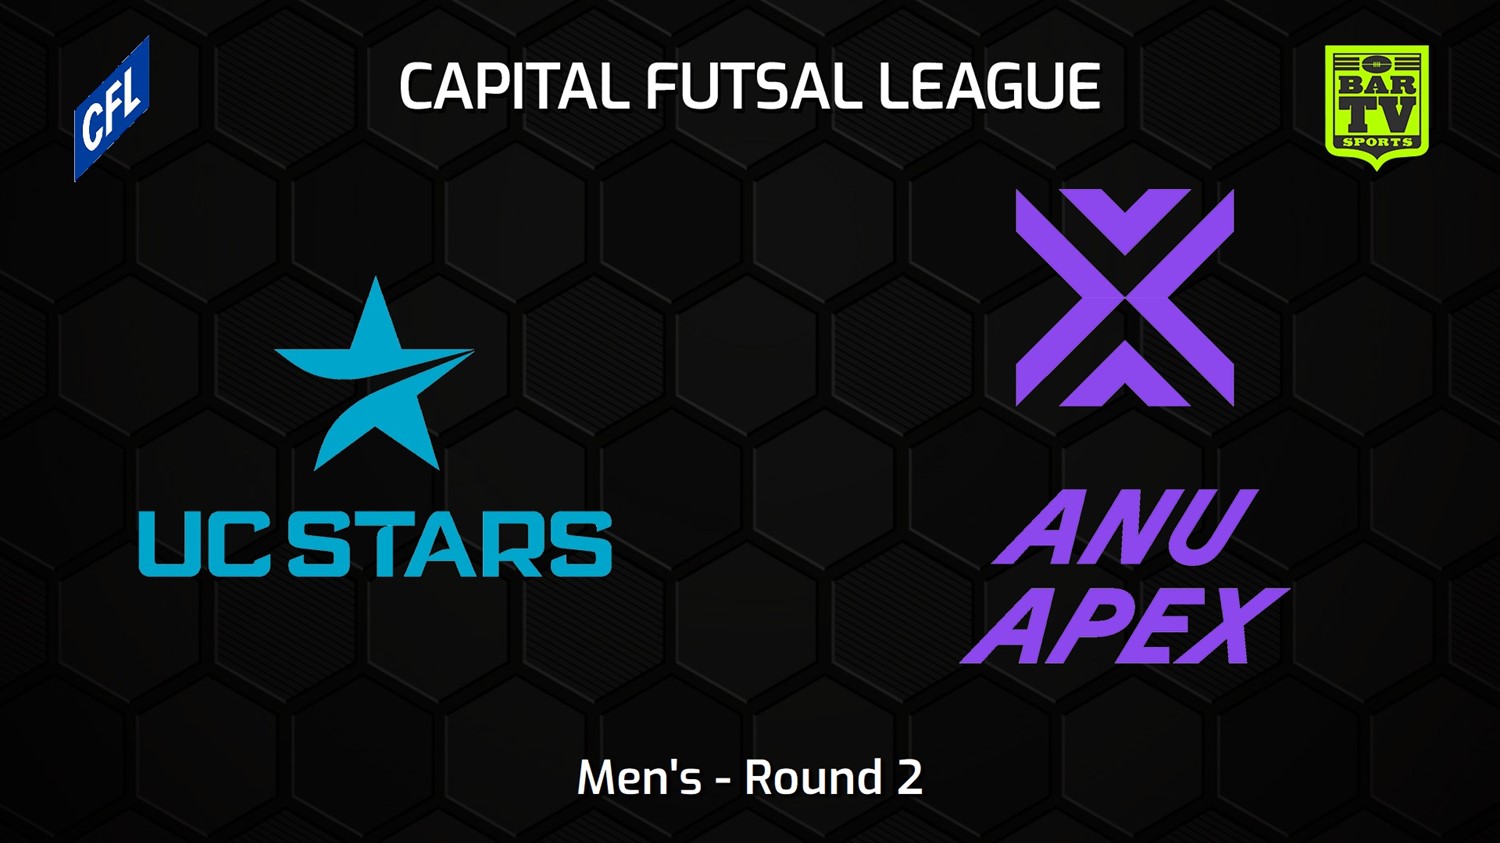 231027-Capital Football Futsal Round 2 - Men's - UC Stars FC v ANU Apex Minigame Slate Image